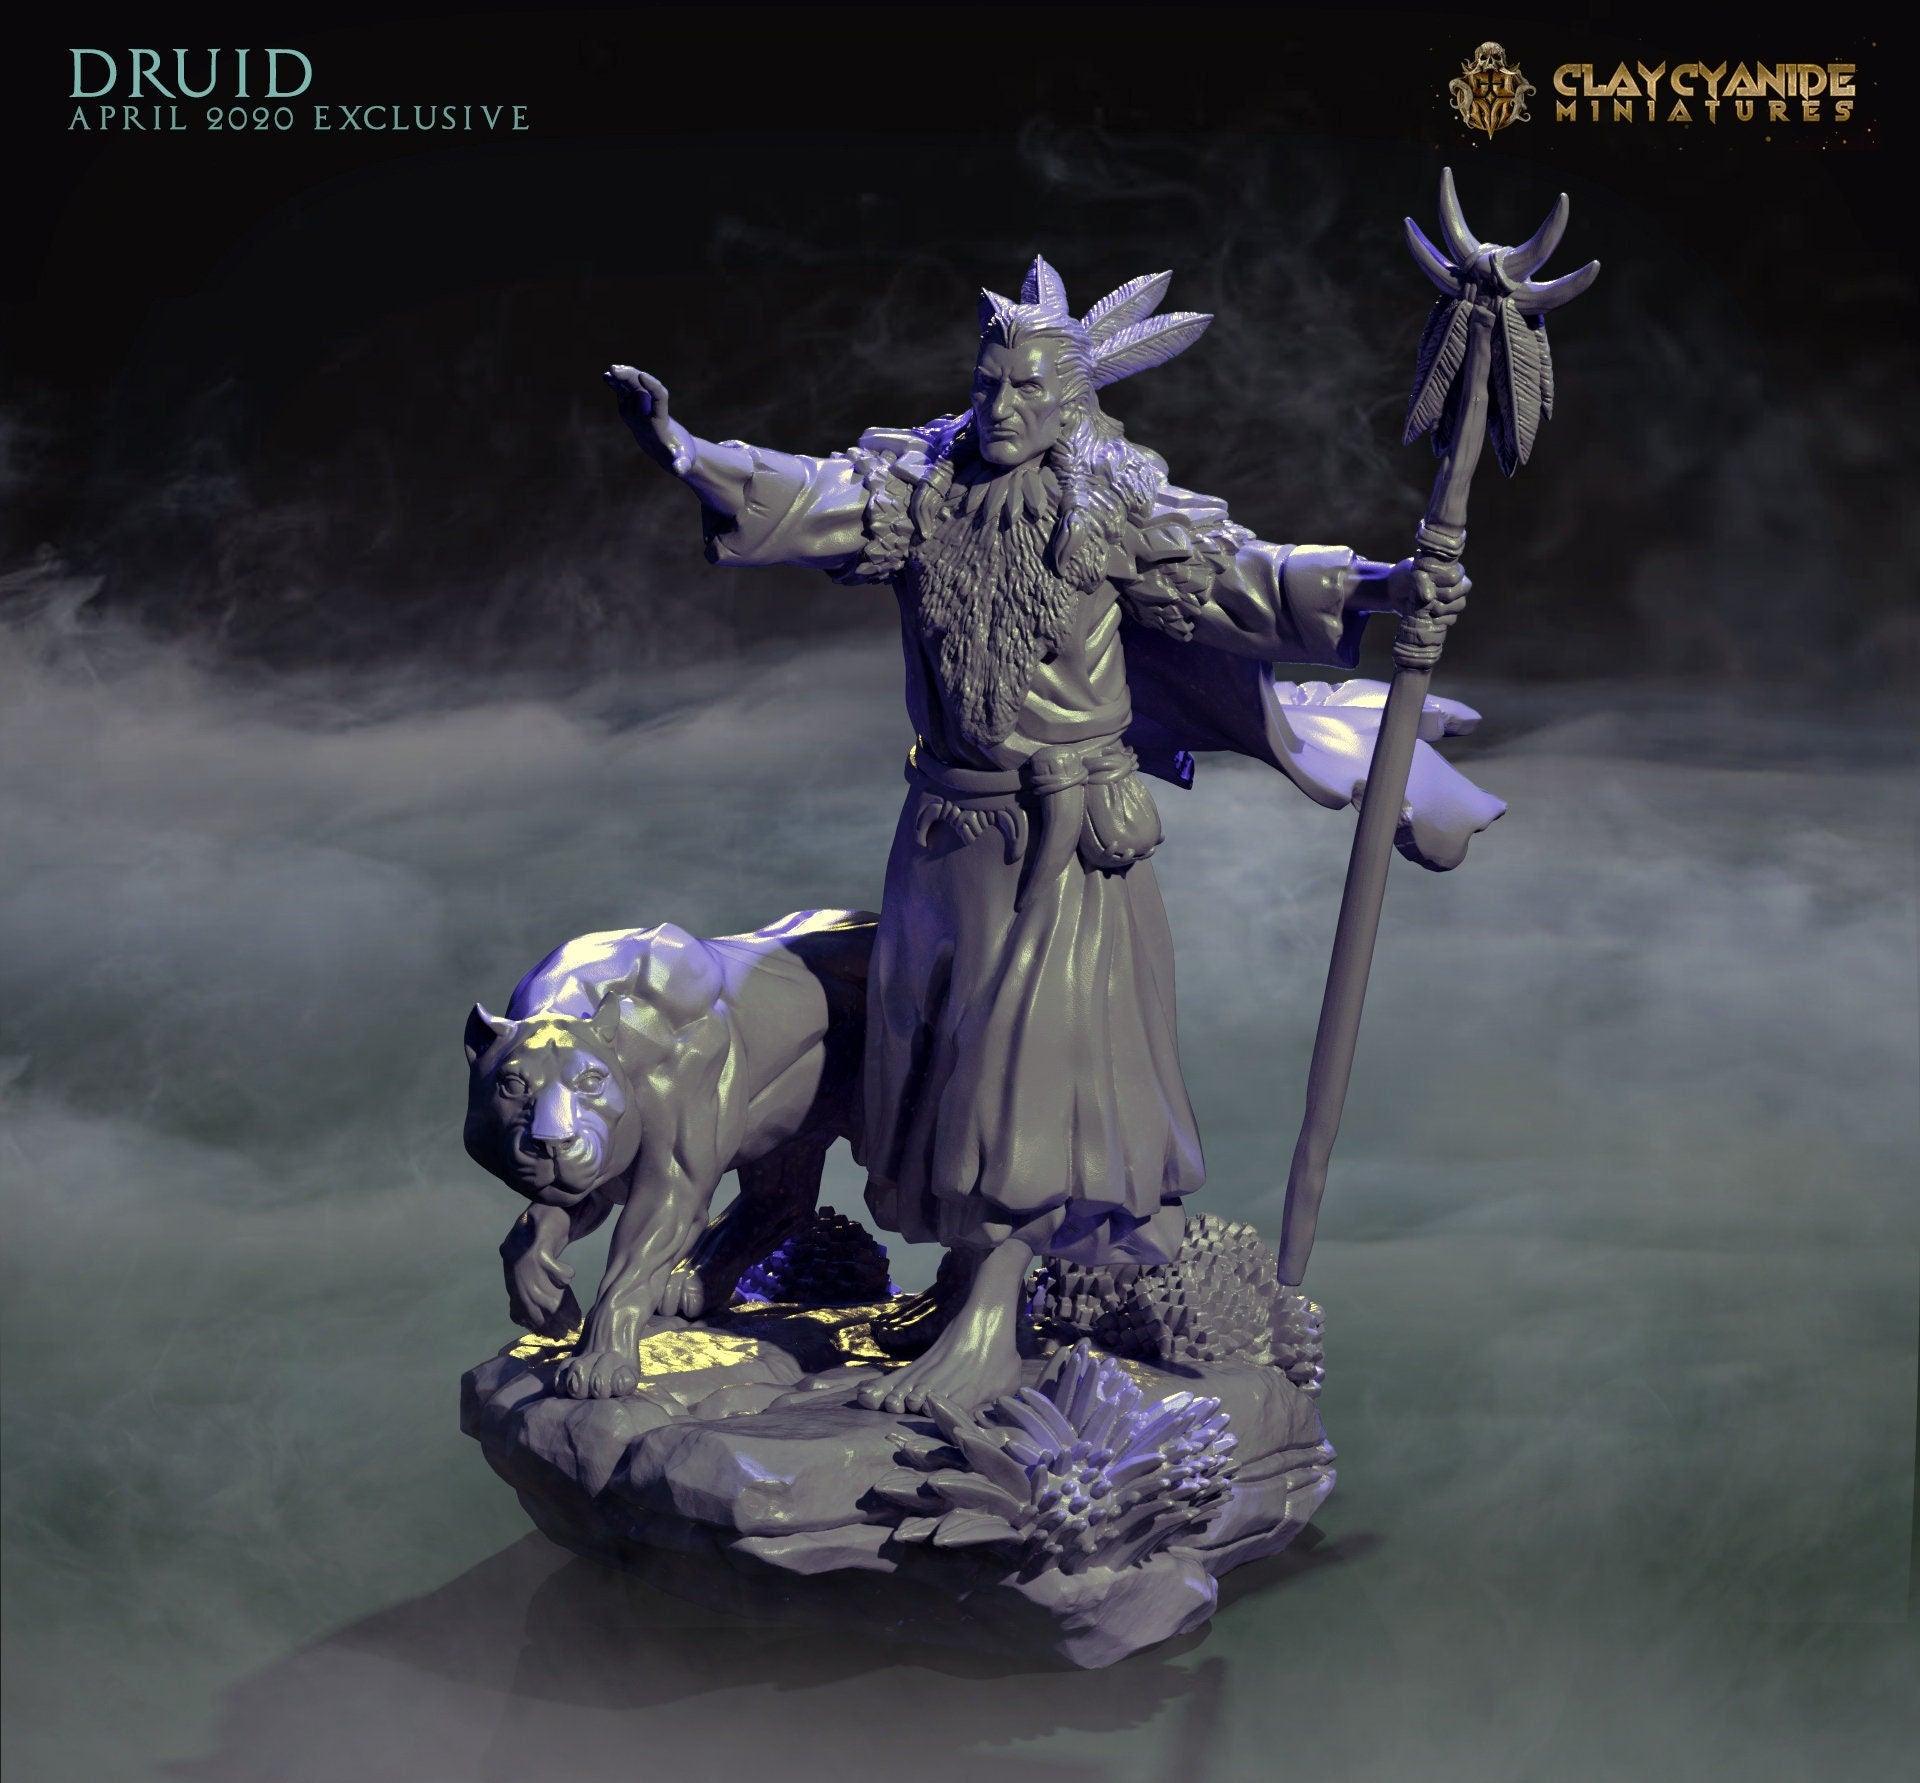 Druid Miniature - Druid Figure Magic Miniature | DnD 5e Miniature for Dungeons and Dragons | 32mm Scale - Plague Miniatures shop for DnD Miniatures